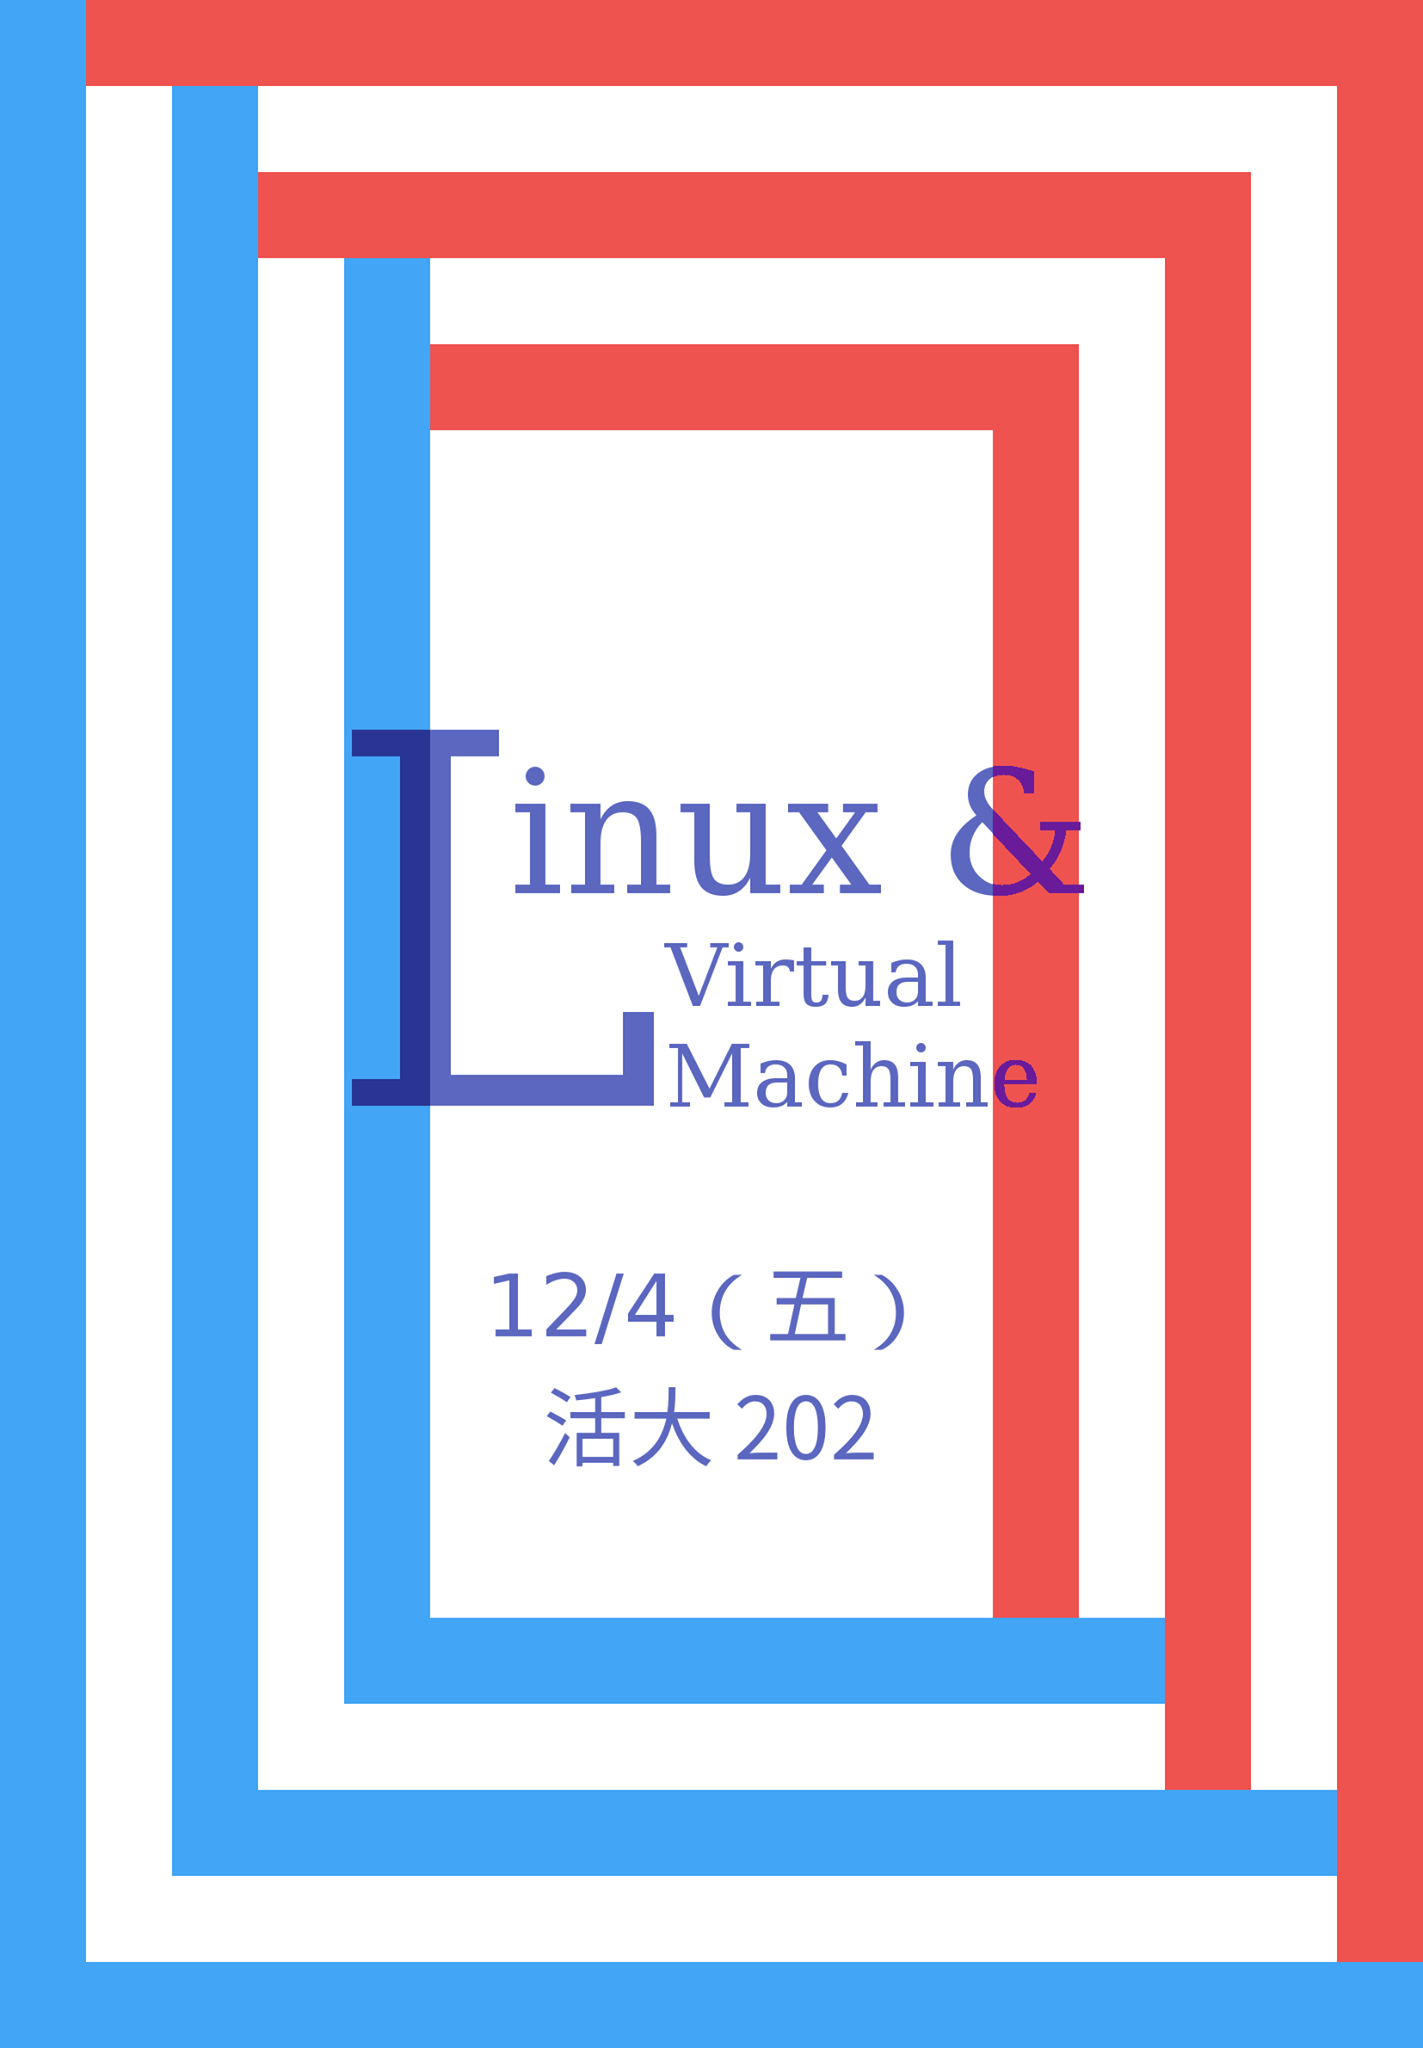 Linux and VirtualMachine